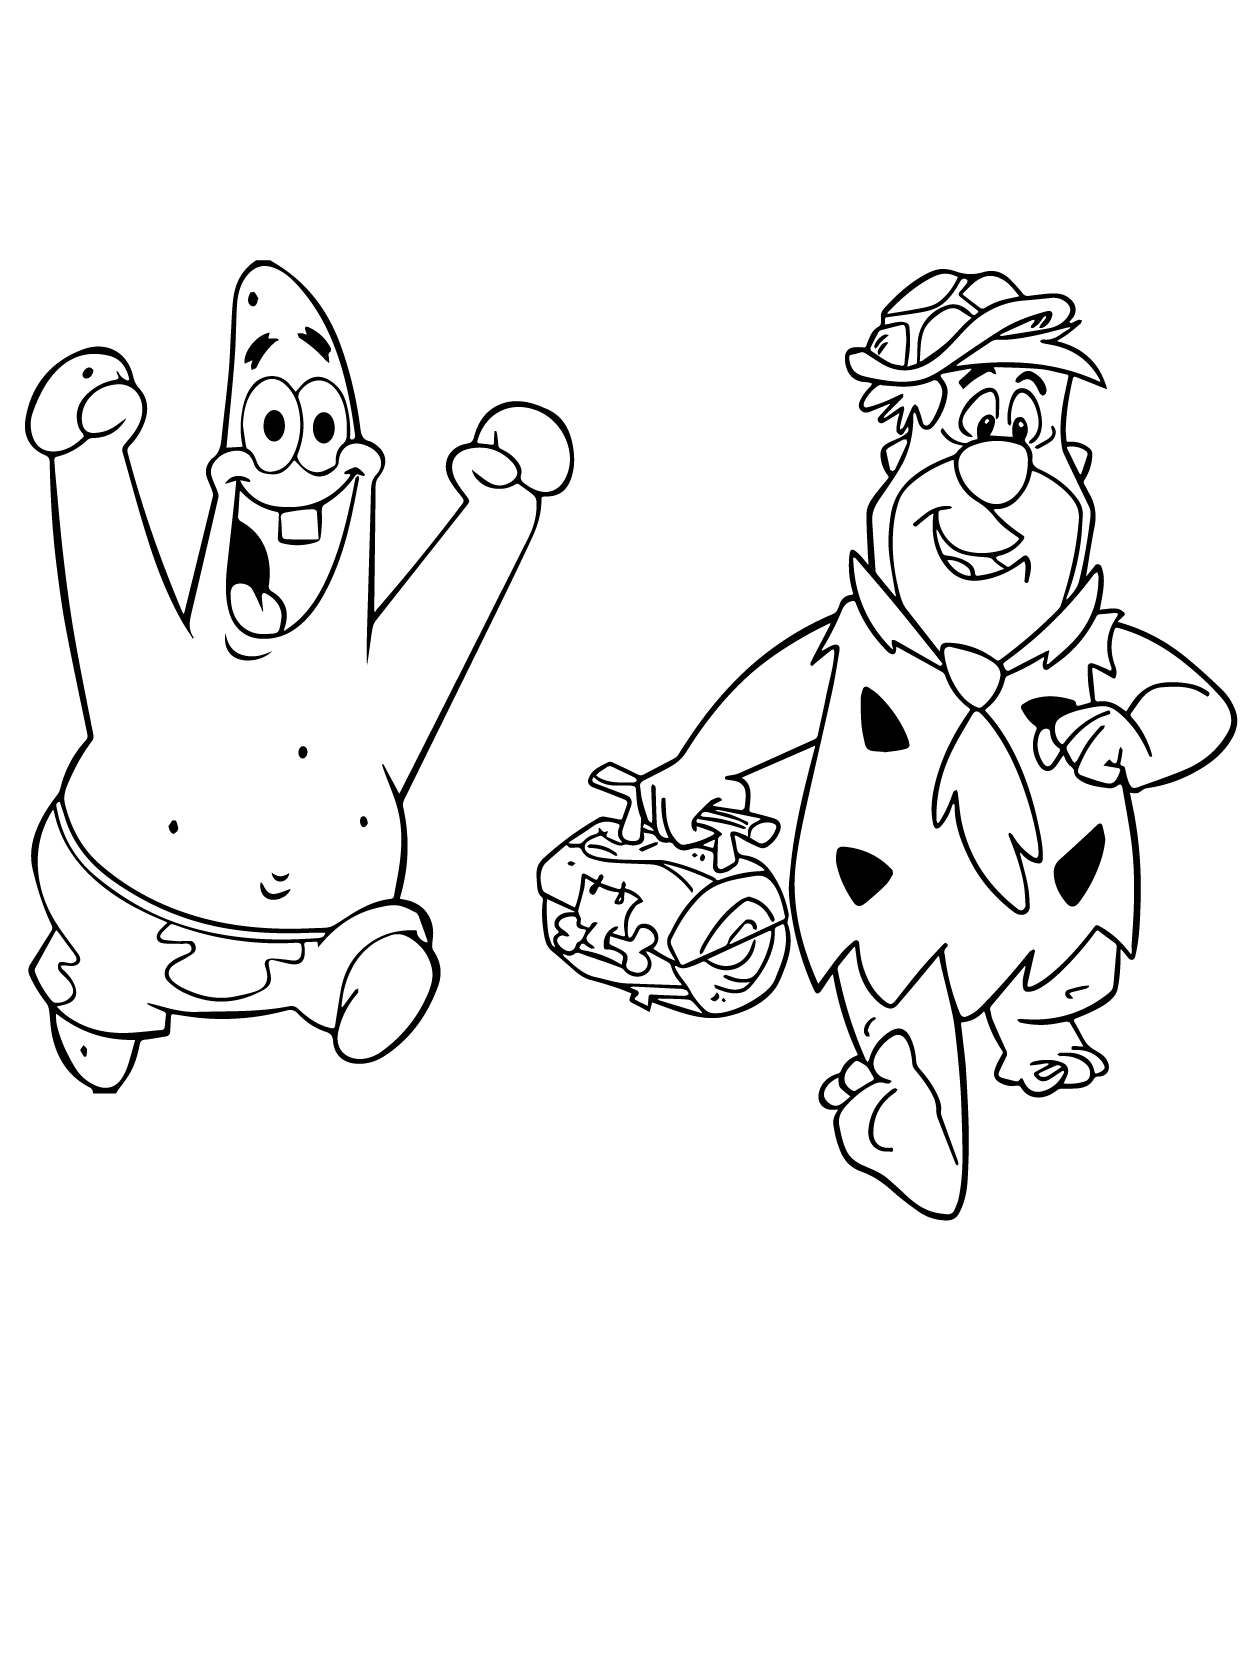 Fred Flintstone and Patrick